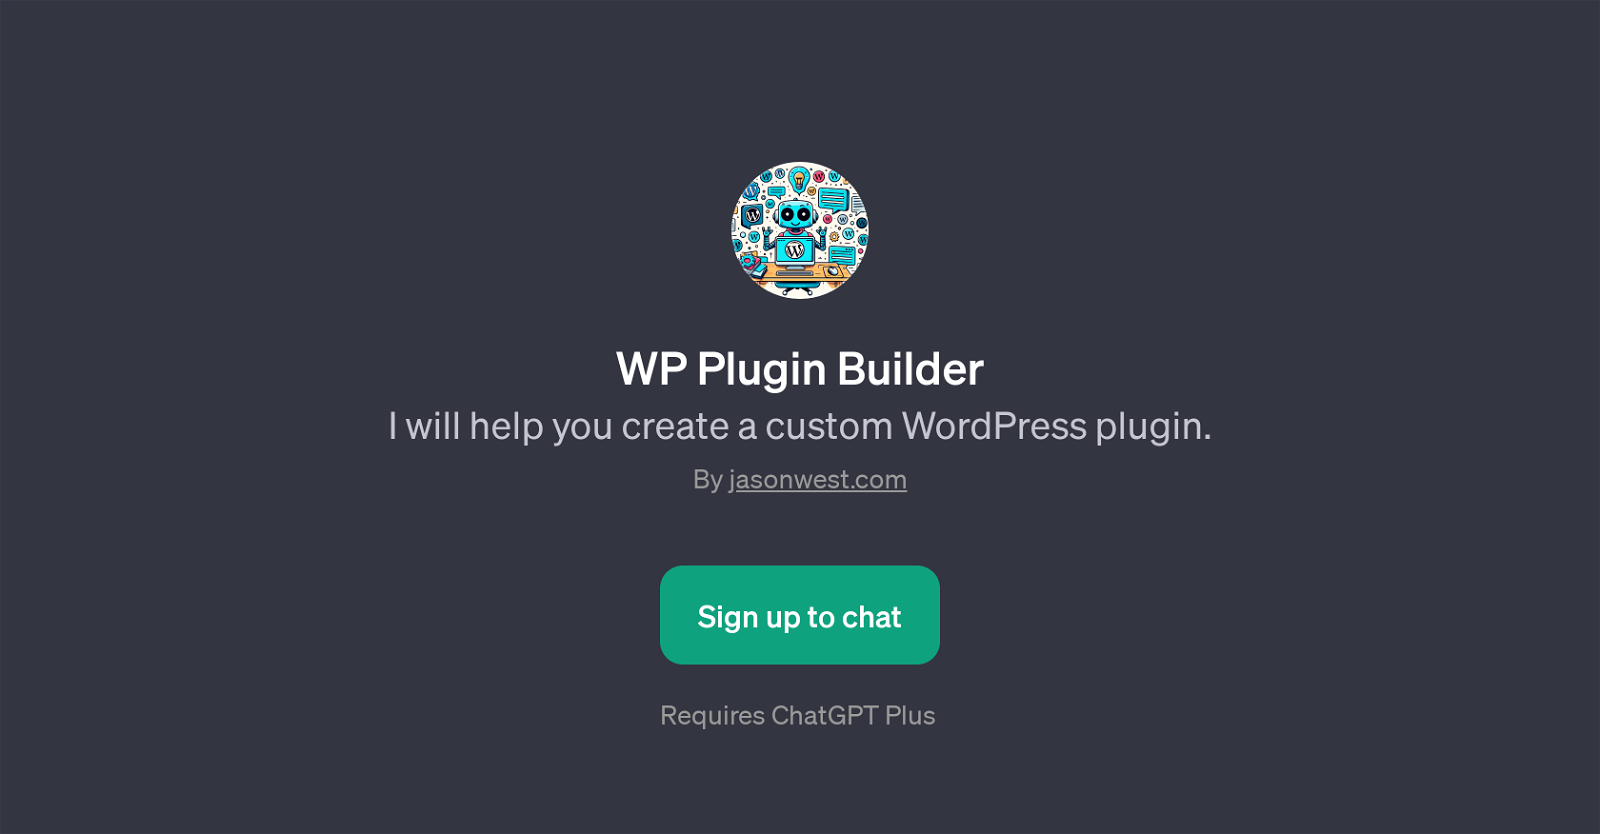 WP Plugin Builder website